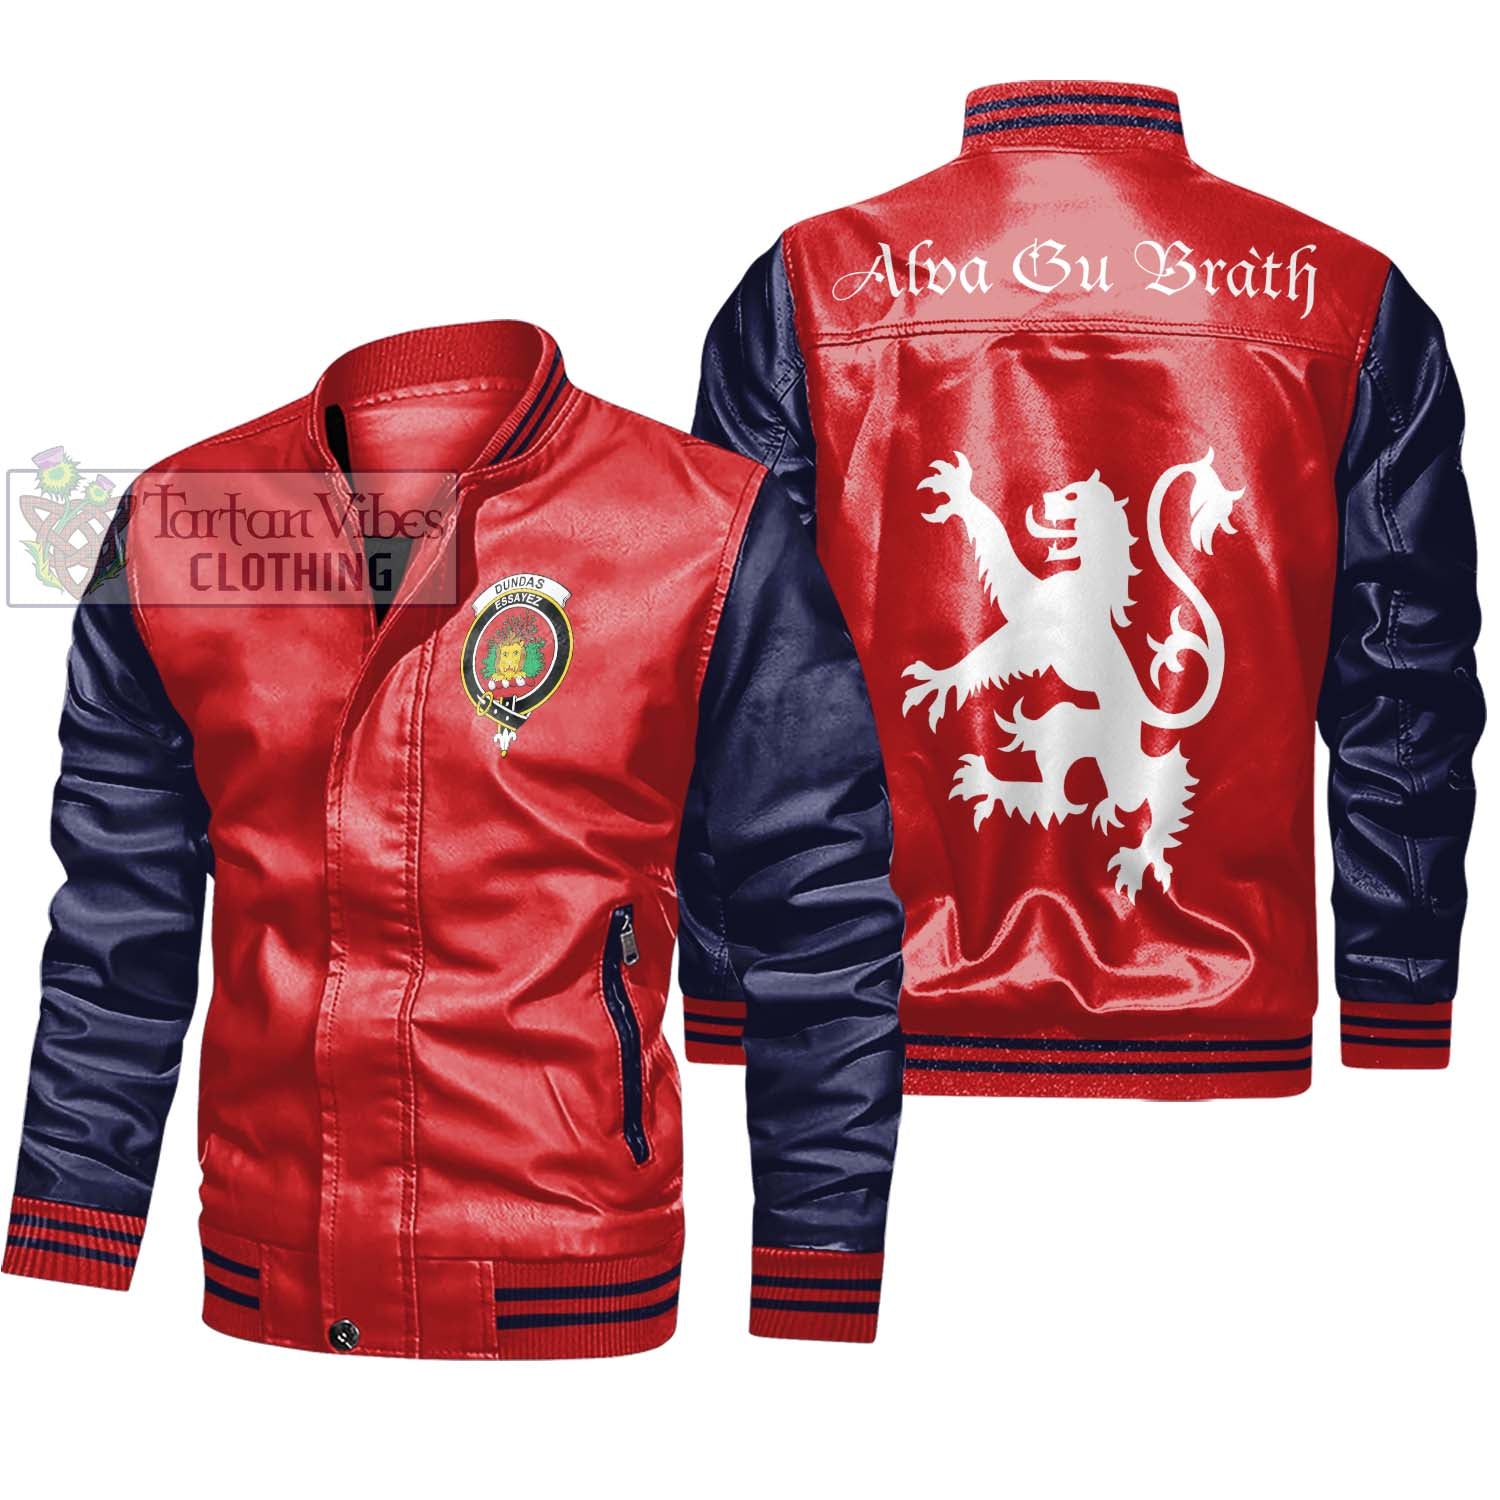 Tartan Vibes Clothing Dundas Family Crest Leather Bomber Jacket Lion Rampant Alba Gu Brath Style